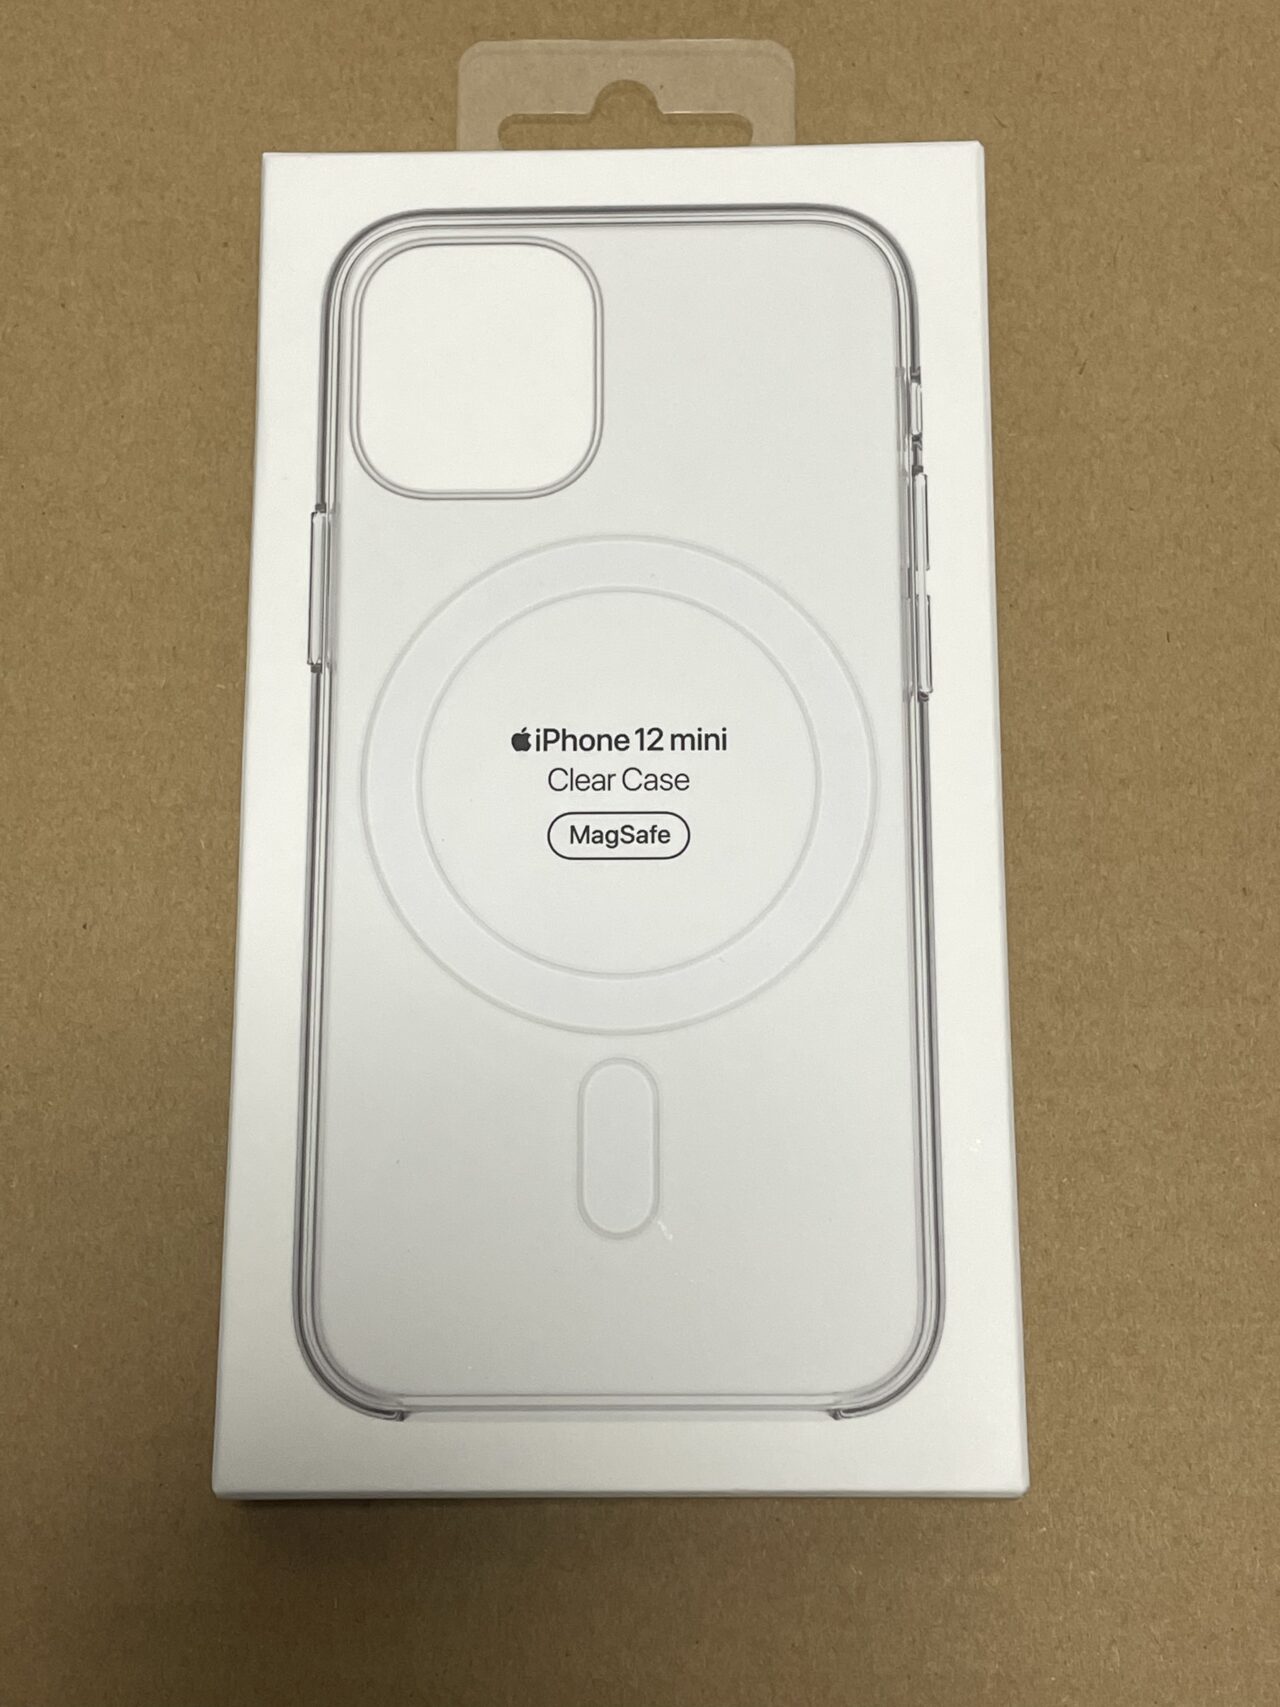 iPhone 12 miniのアップル純正MagSafe対応クリアケースを買いました〜簡単に紹介